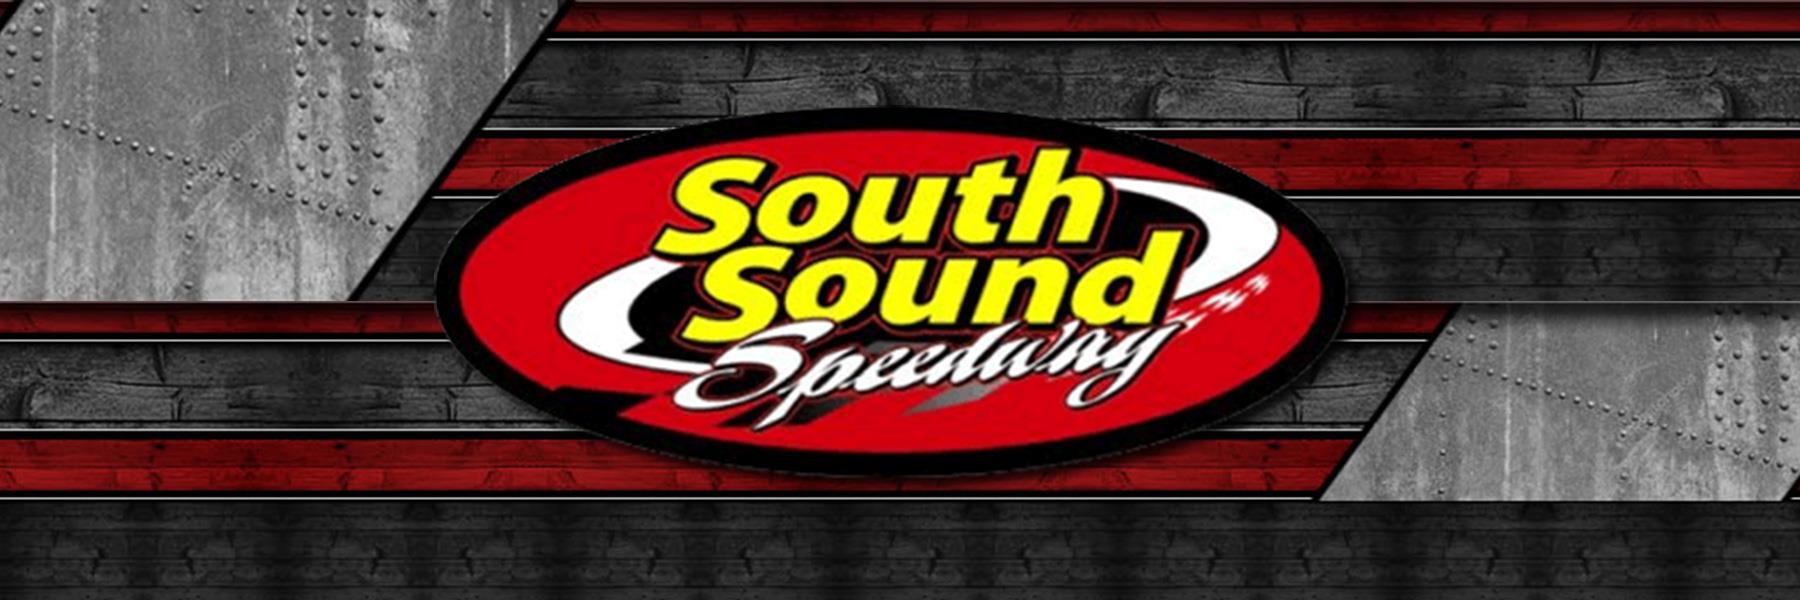 5/14/2022 - South Sound Speedway